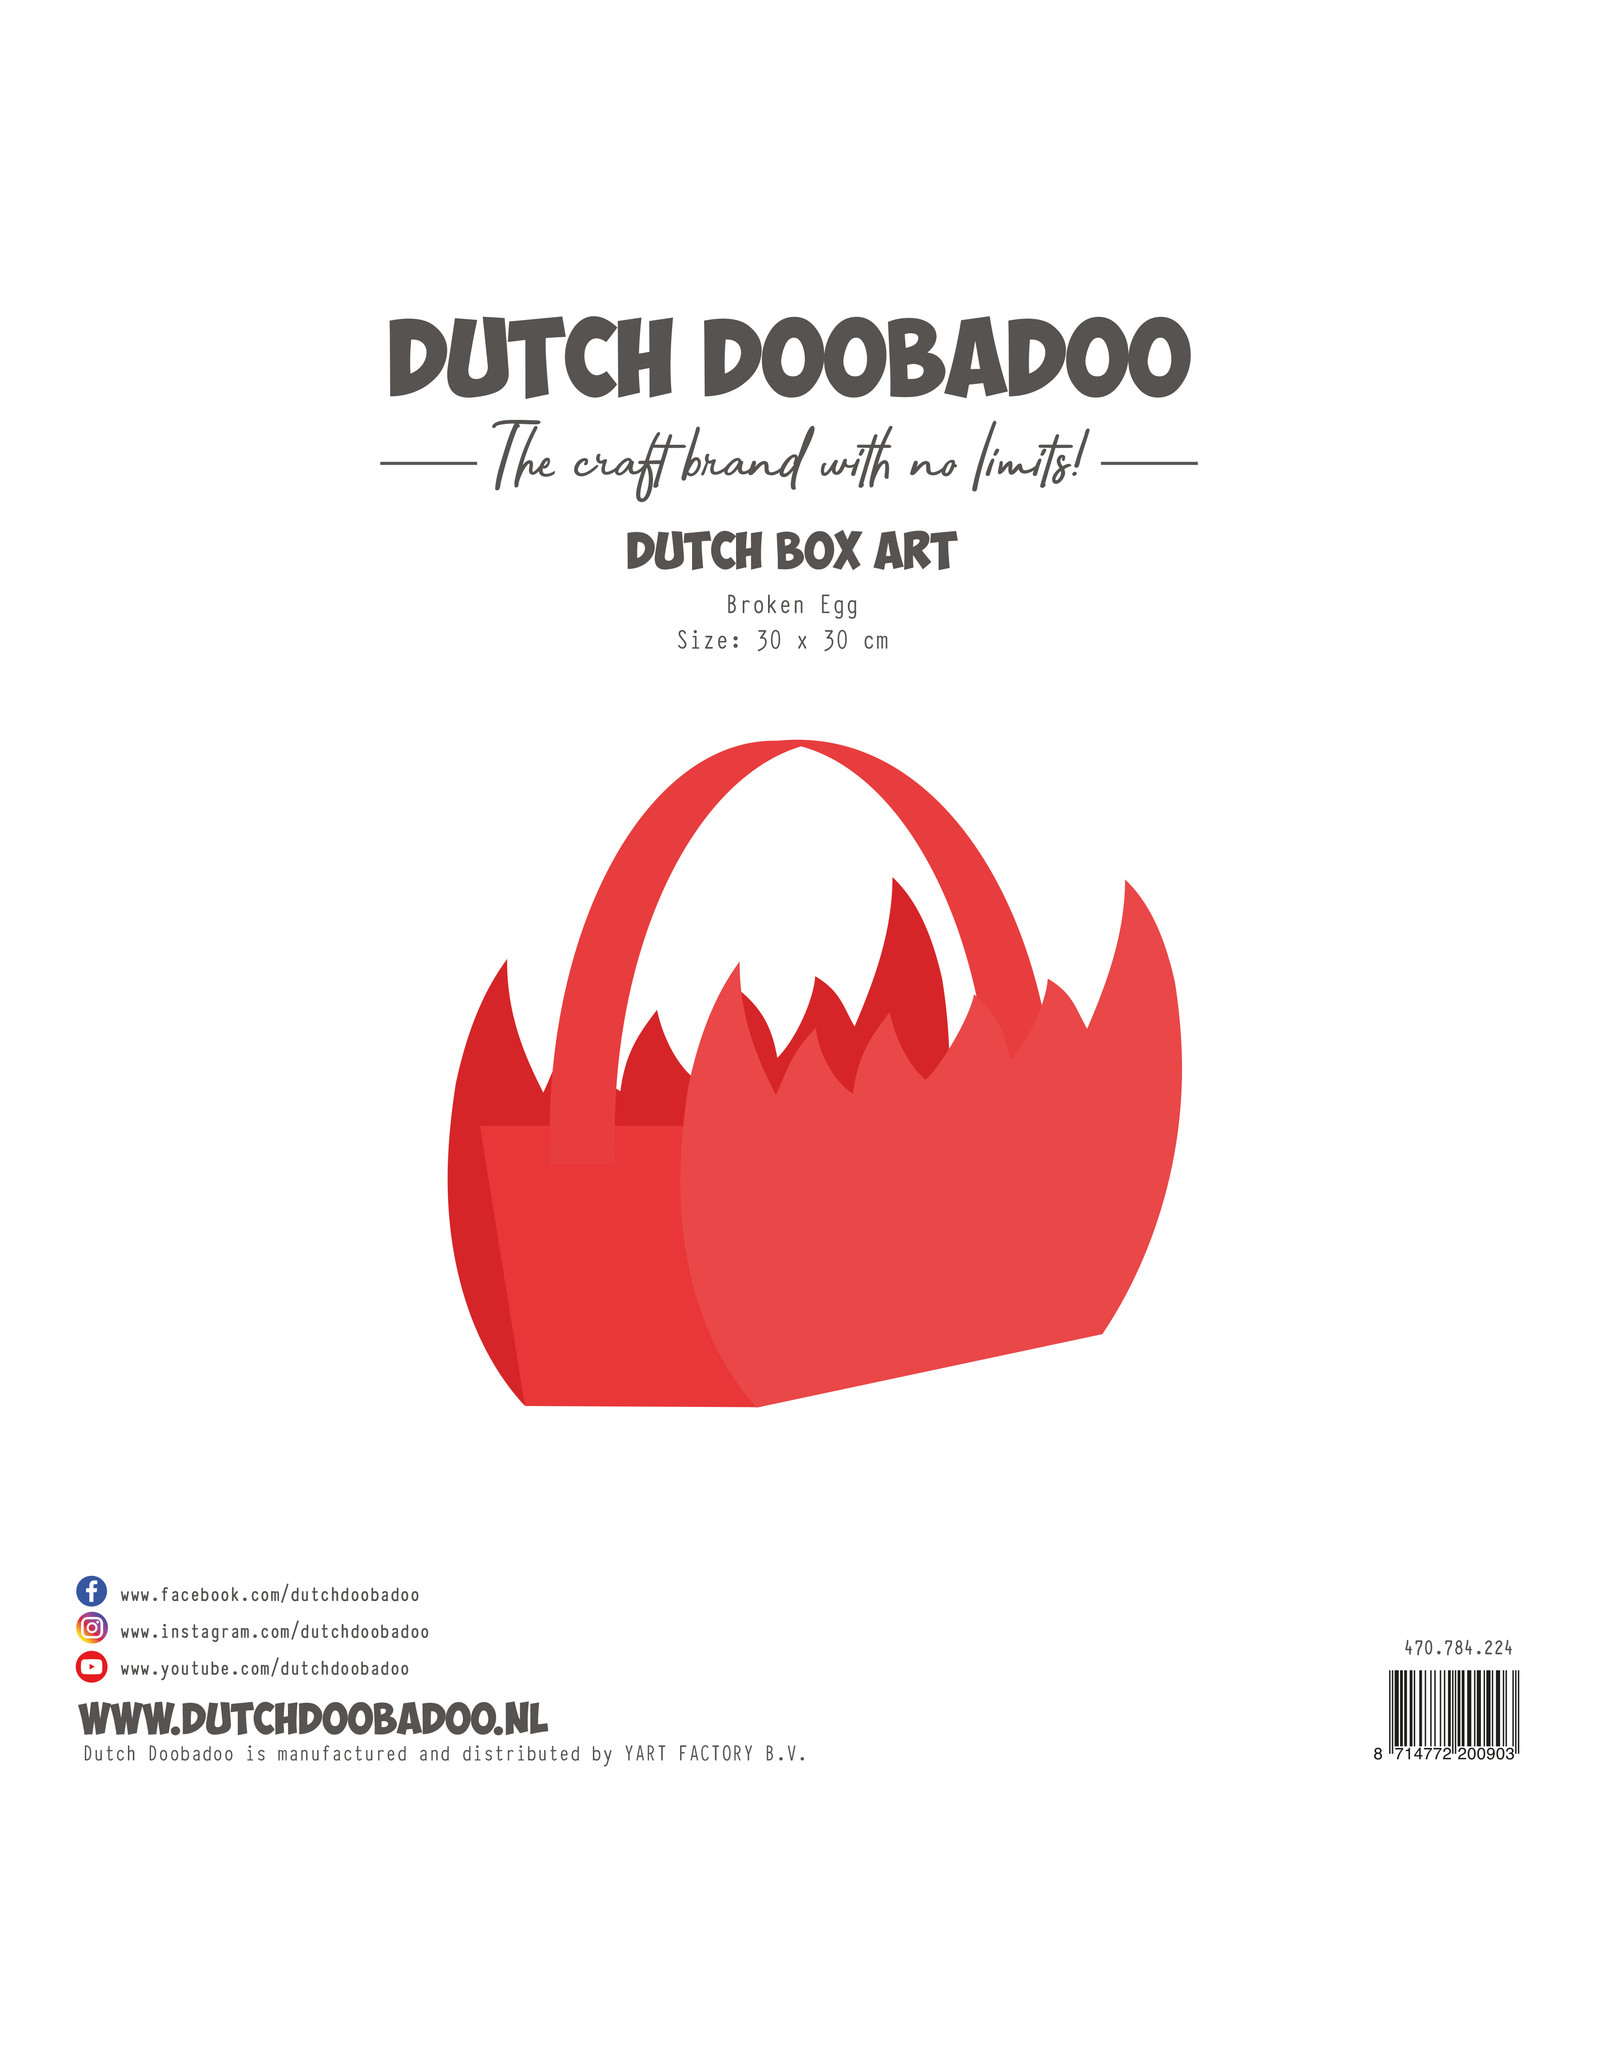 Dutch Doobadoo DDBD Box Art Broken Egg (30 x 30 cm)